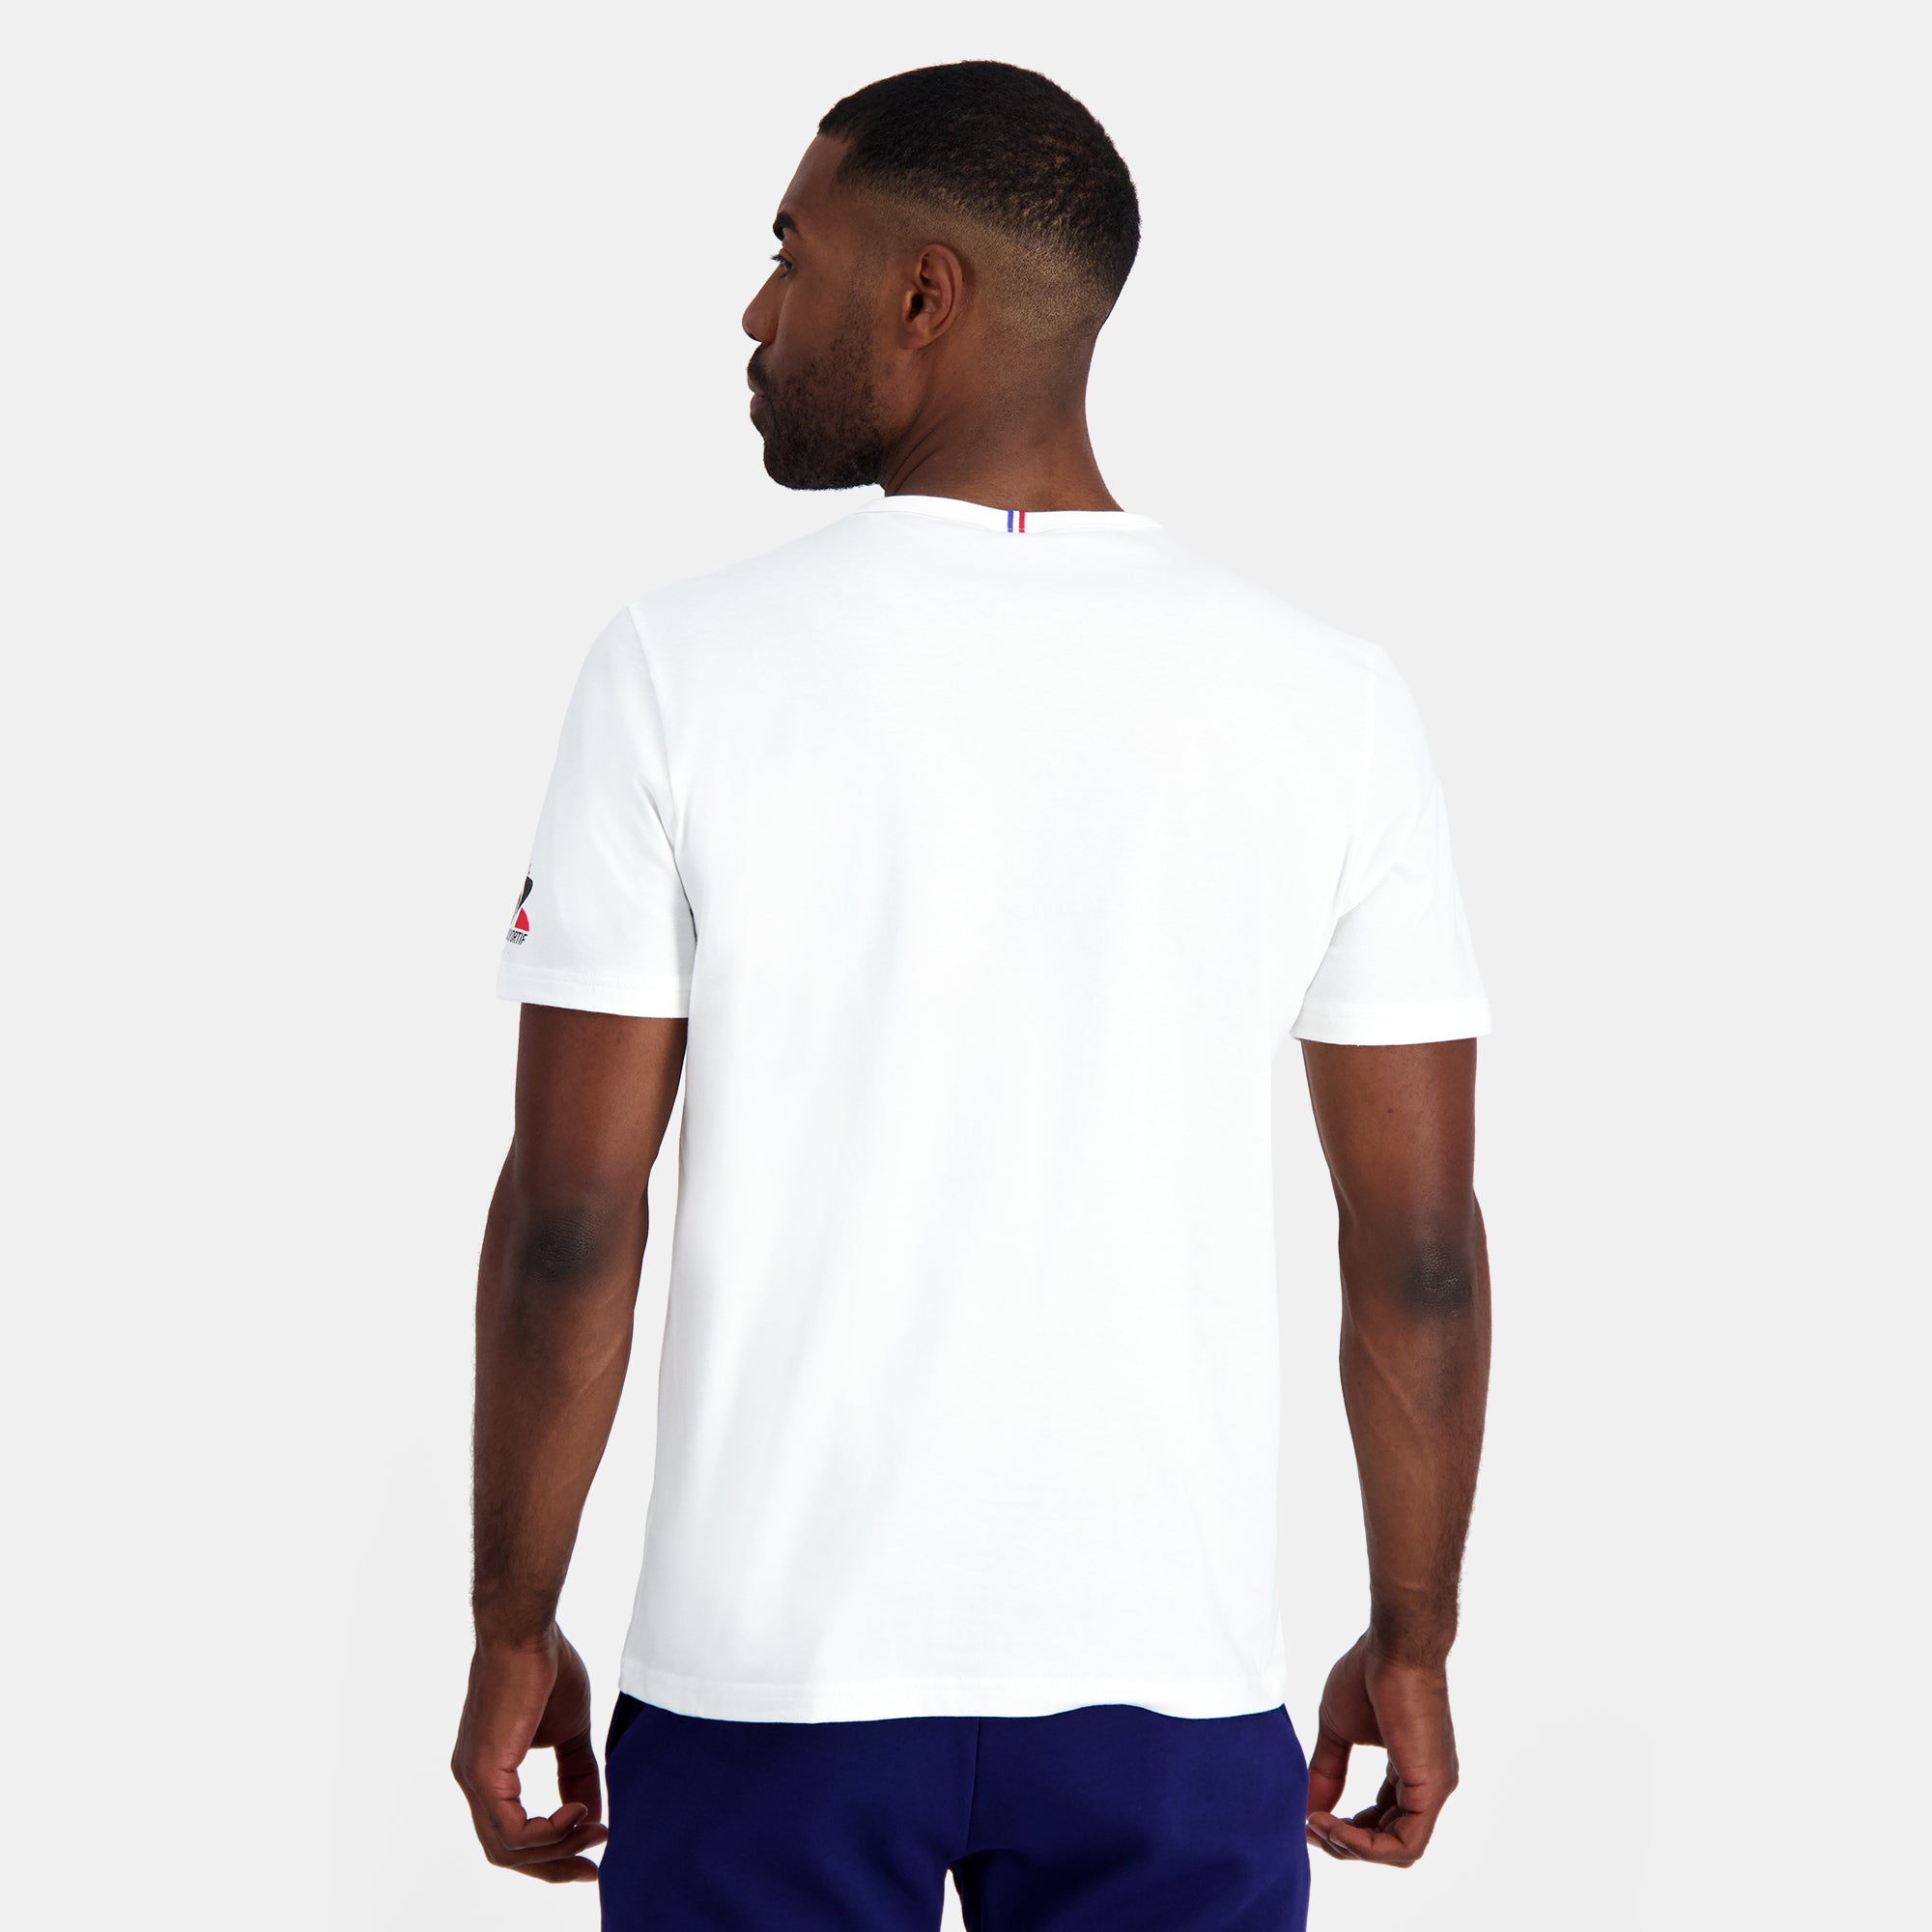 2320103-FFR FANWEAR Tee SS N°1 M new optical whi | T-shirt Homme Logo arche